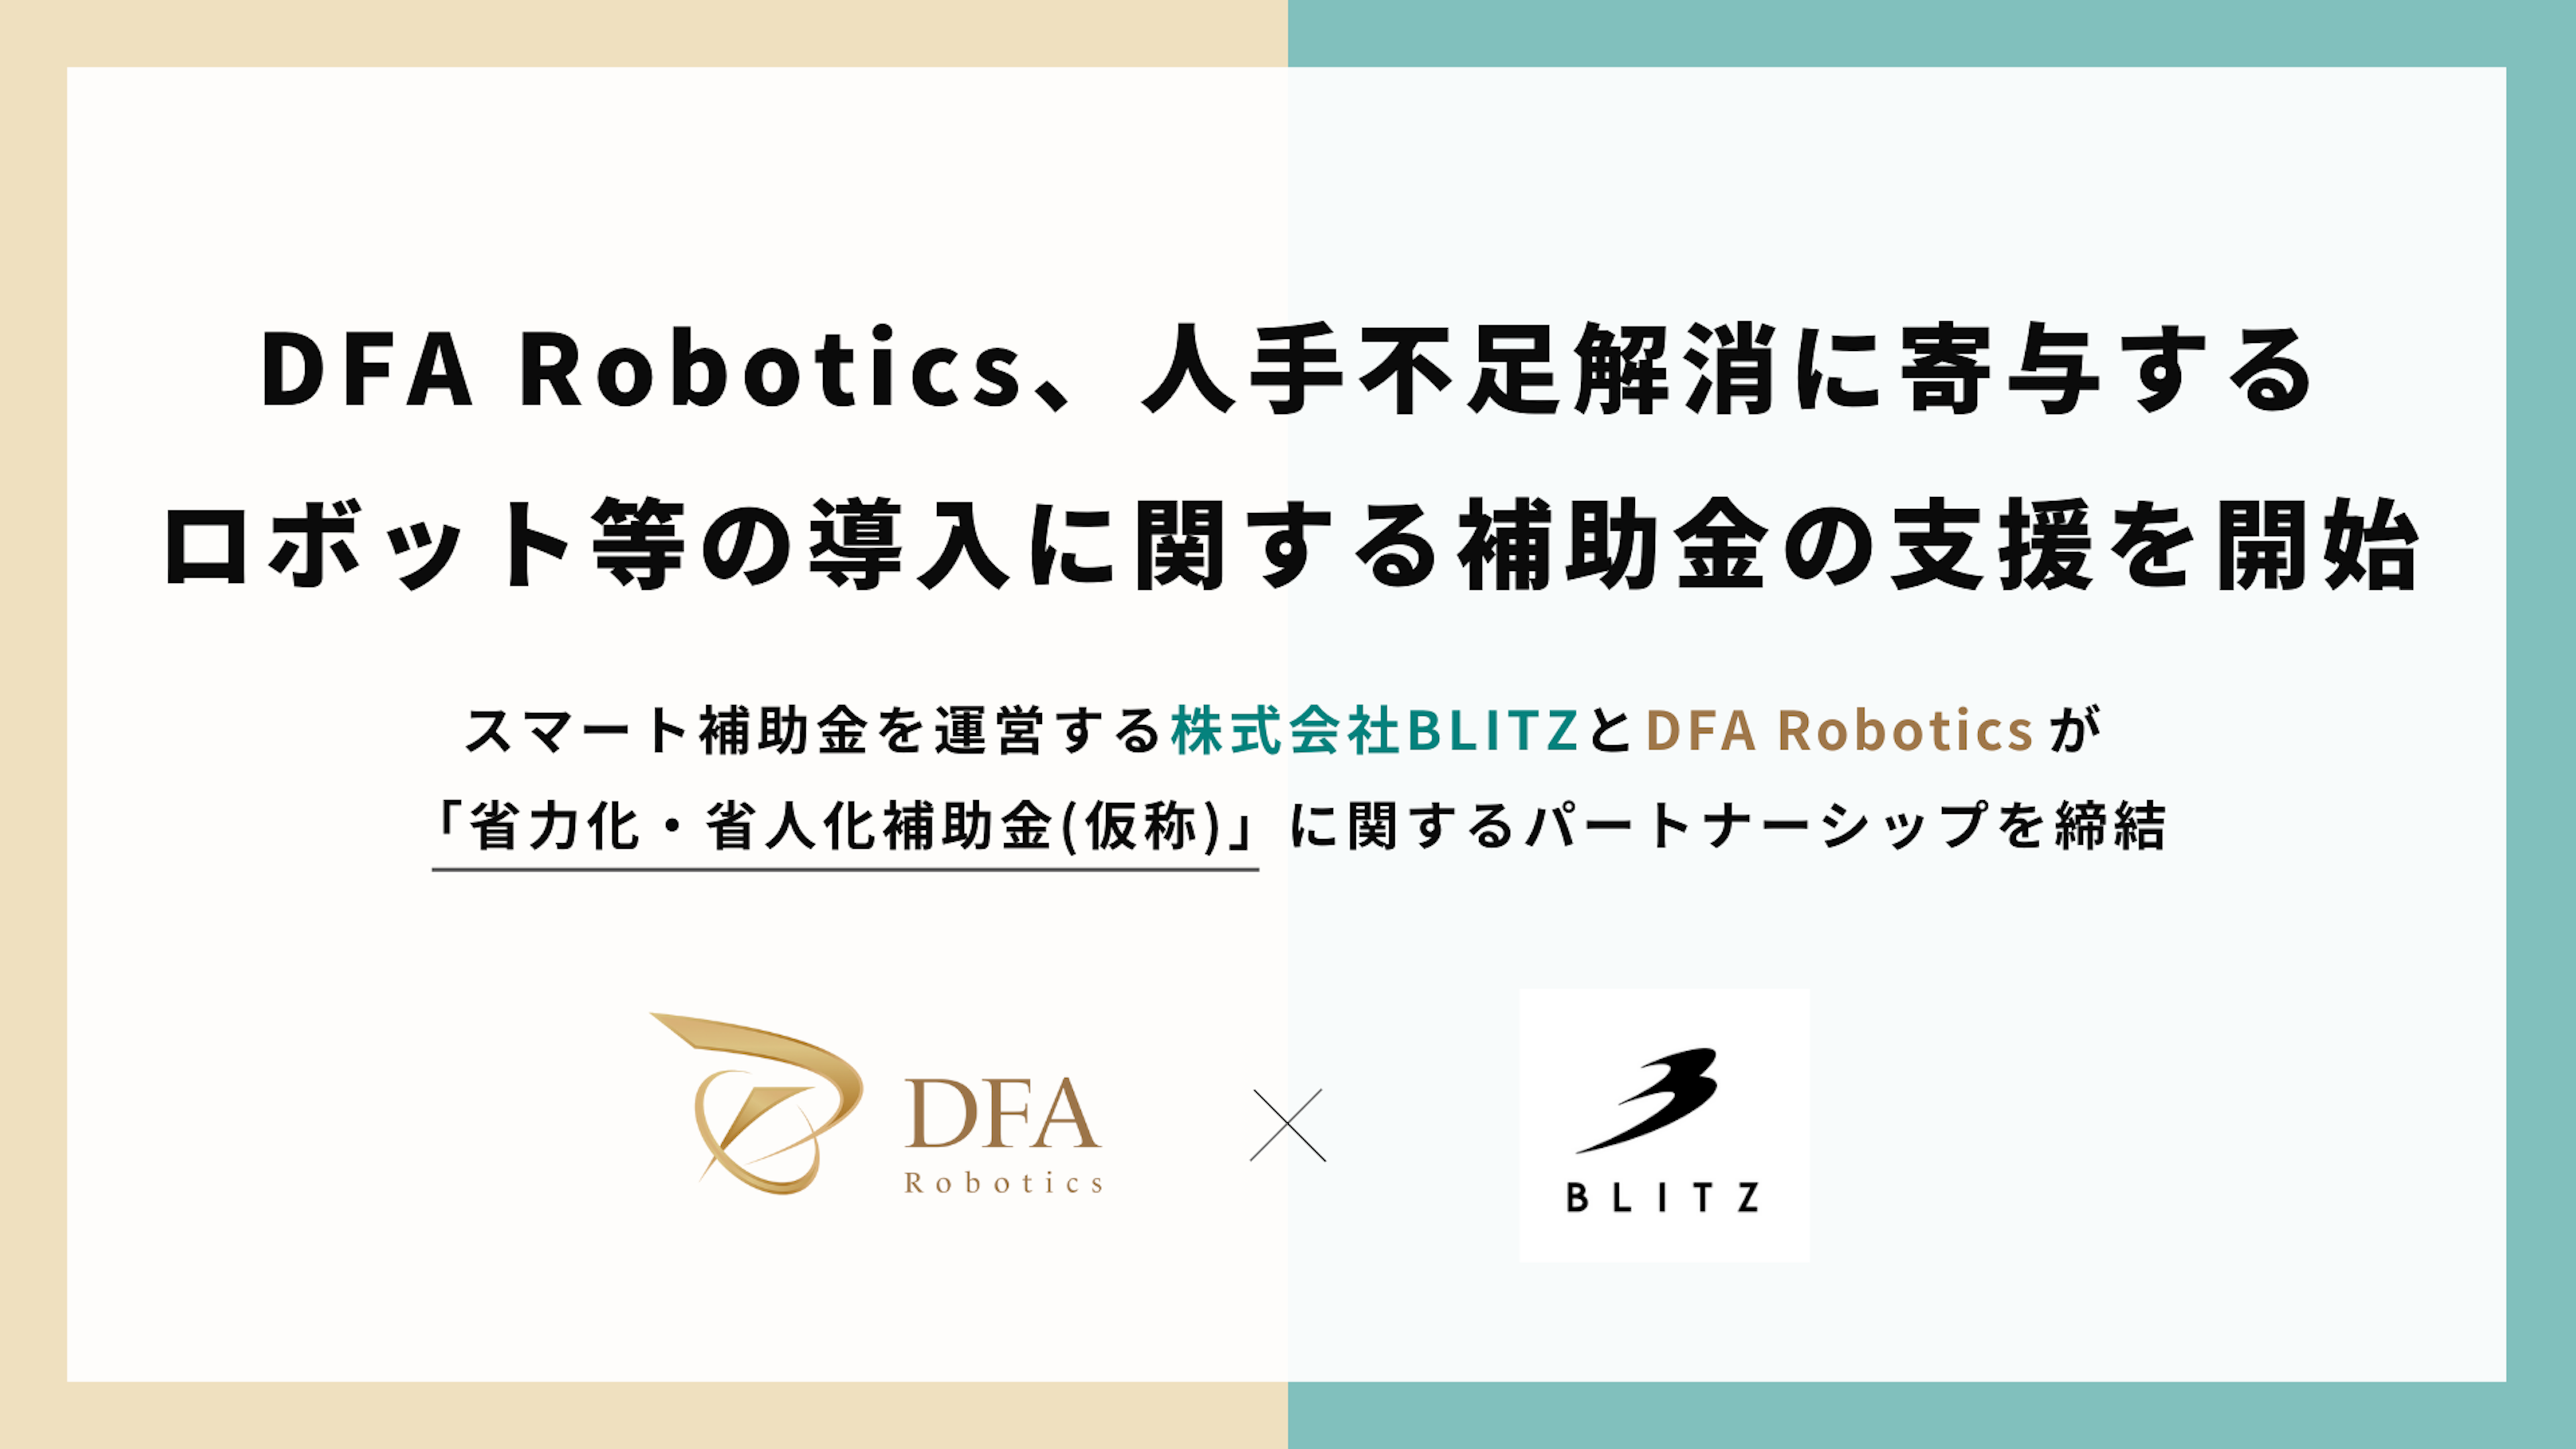 DFA Robotics、人手不足解消に寄与するロボット等の導入に関する補助金の支援を開始 〜スマート補助金を運営する株式会社BLITZとDFA Roboticsが 「省力化・省人化補助金（仮称）」に関するパートナーシップを締結〜のキービジュアル